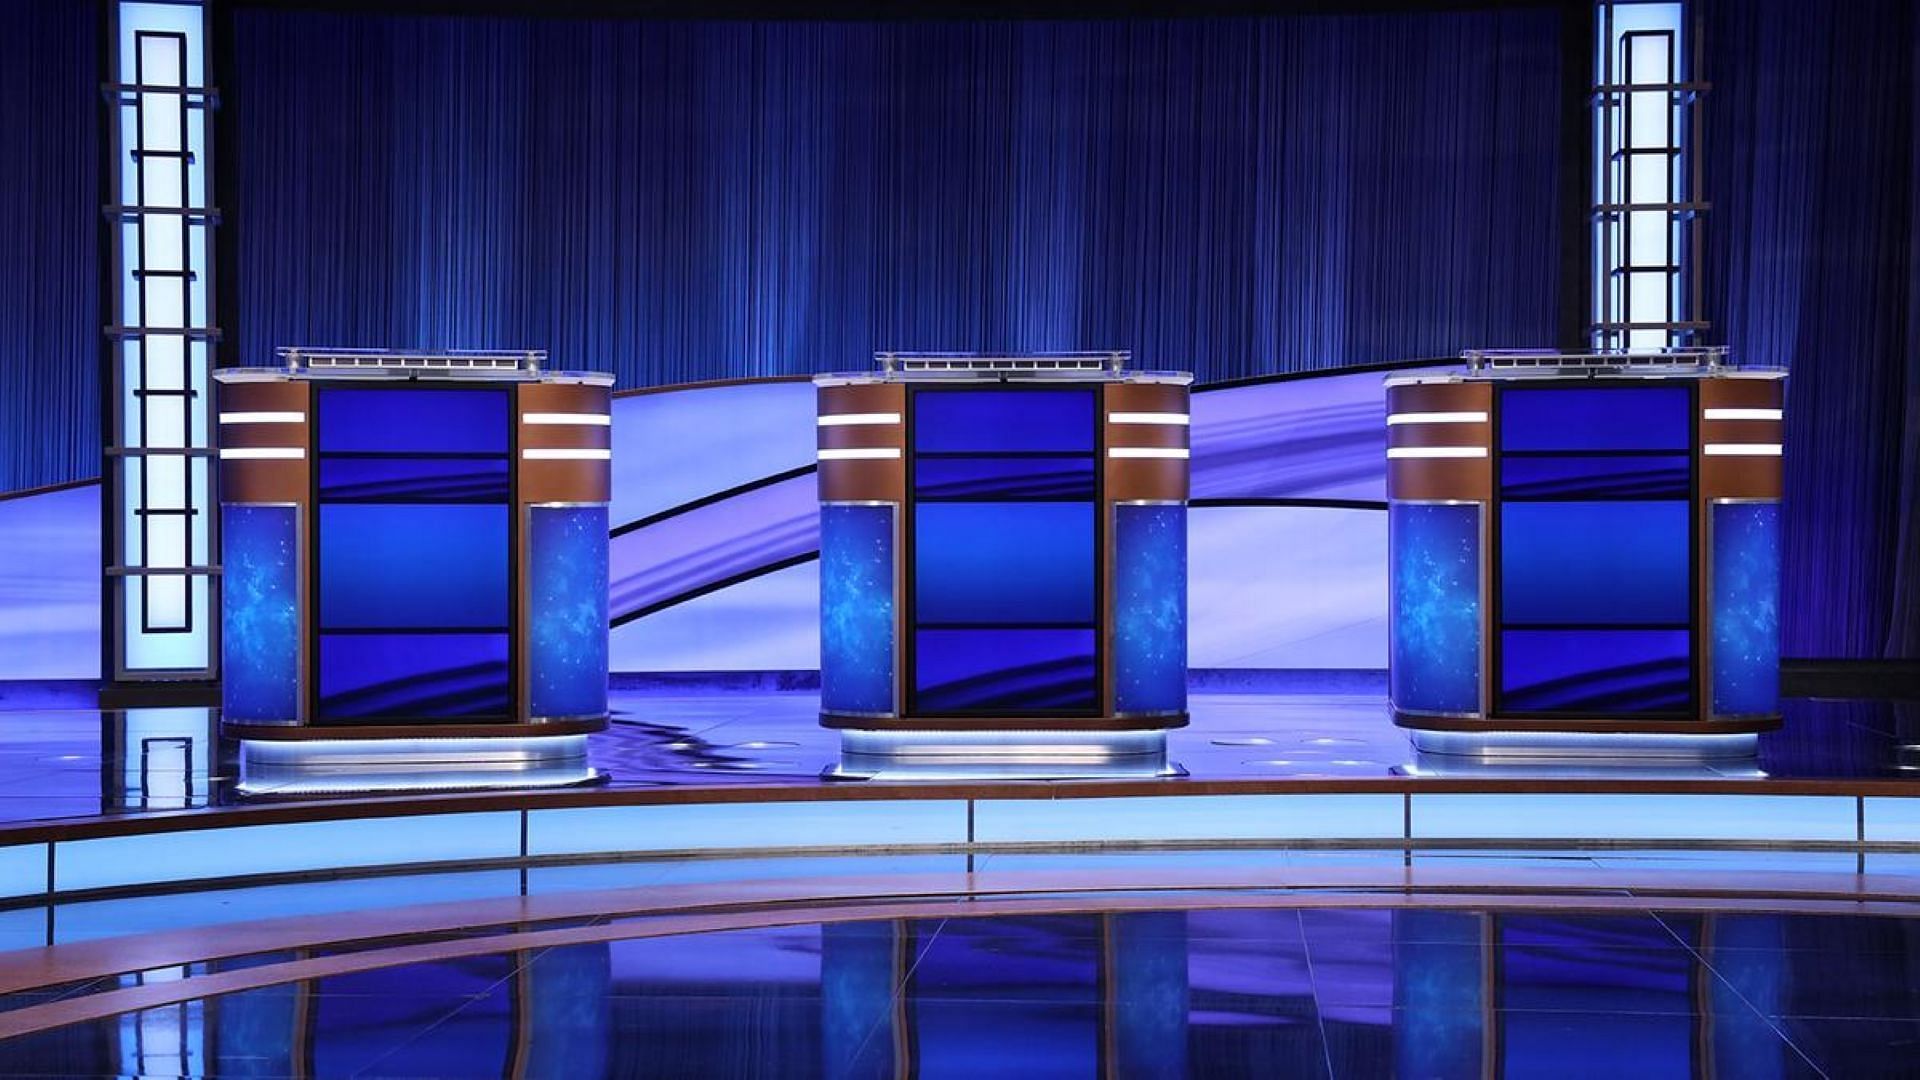 Today’s Final Jeopardy! answer Thursday, December 15, 2022